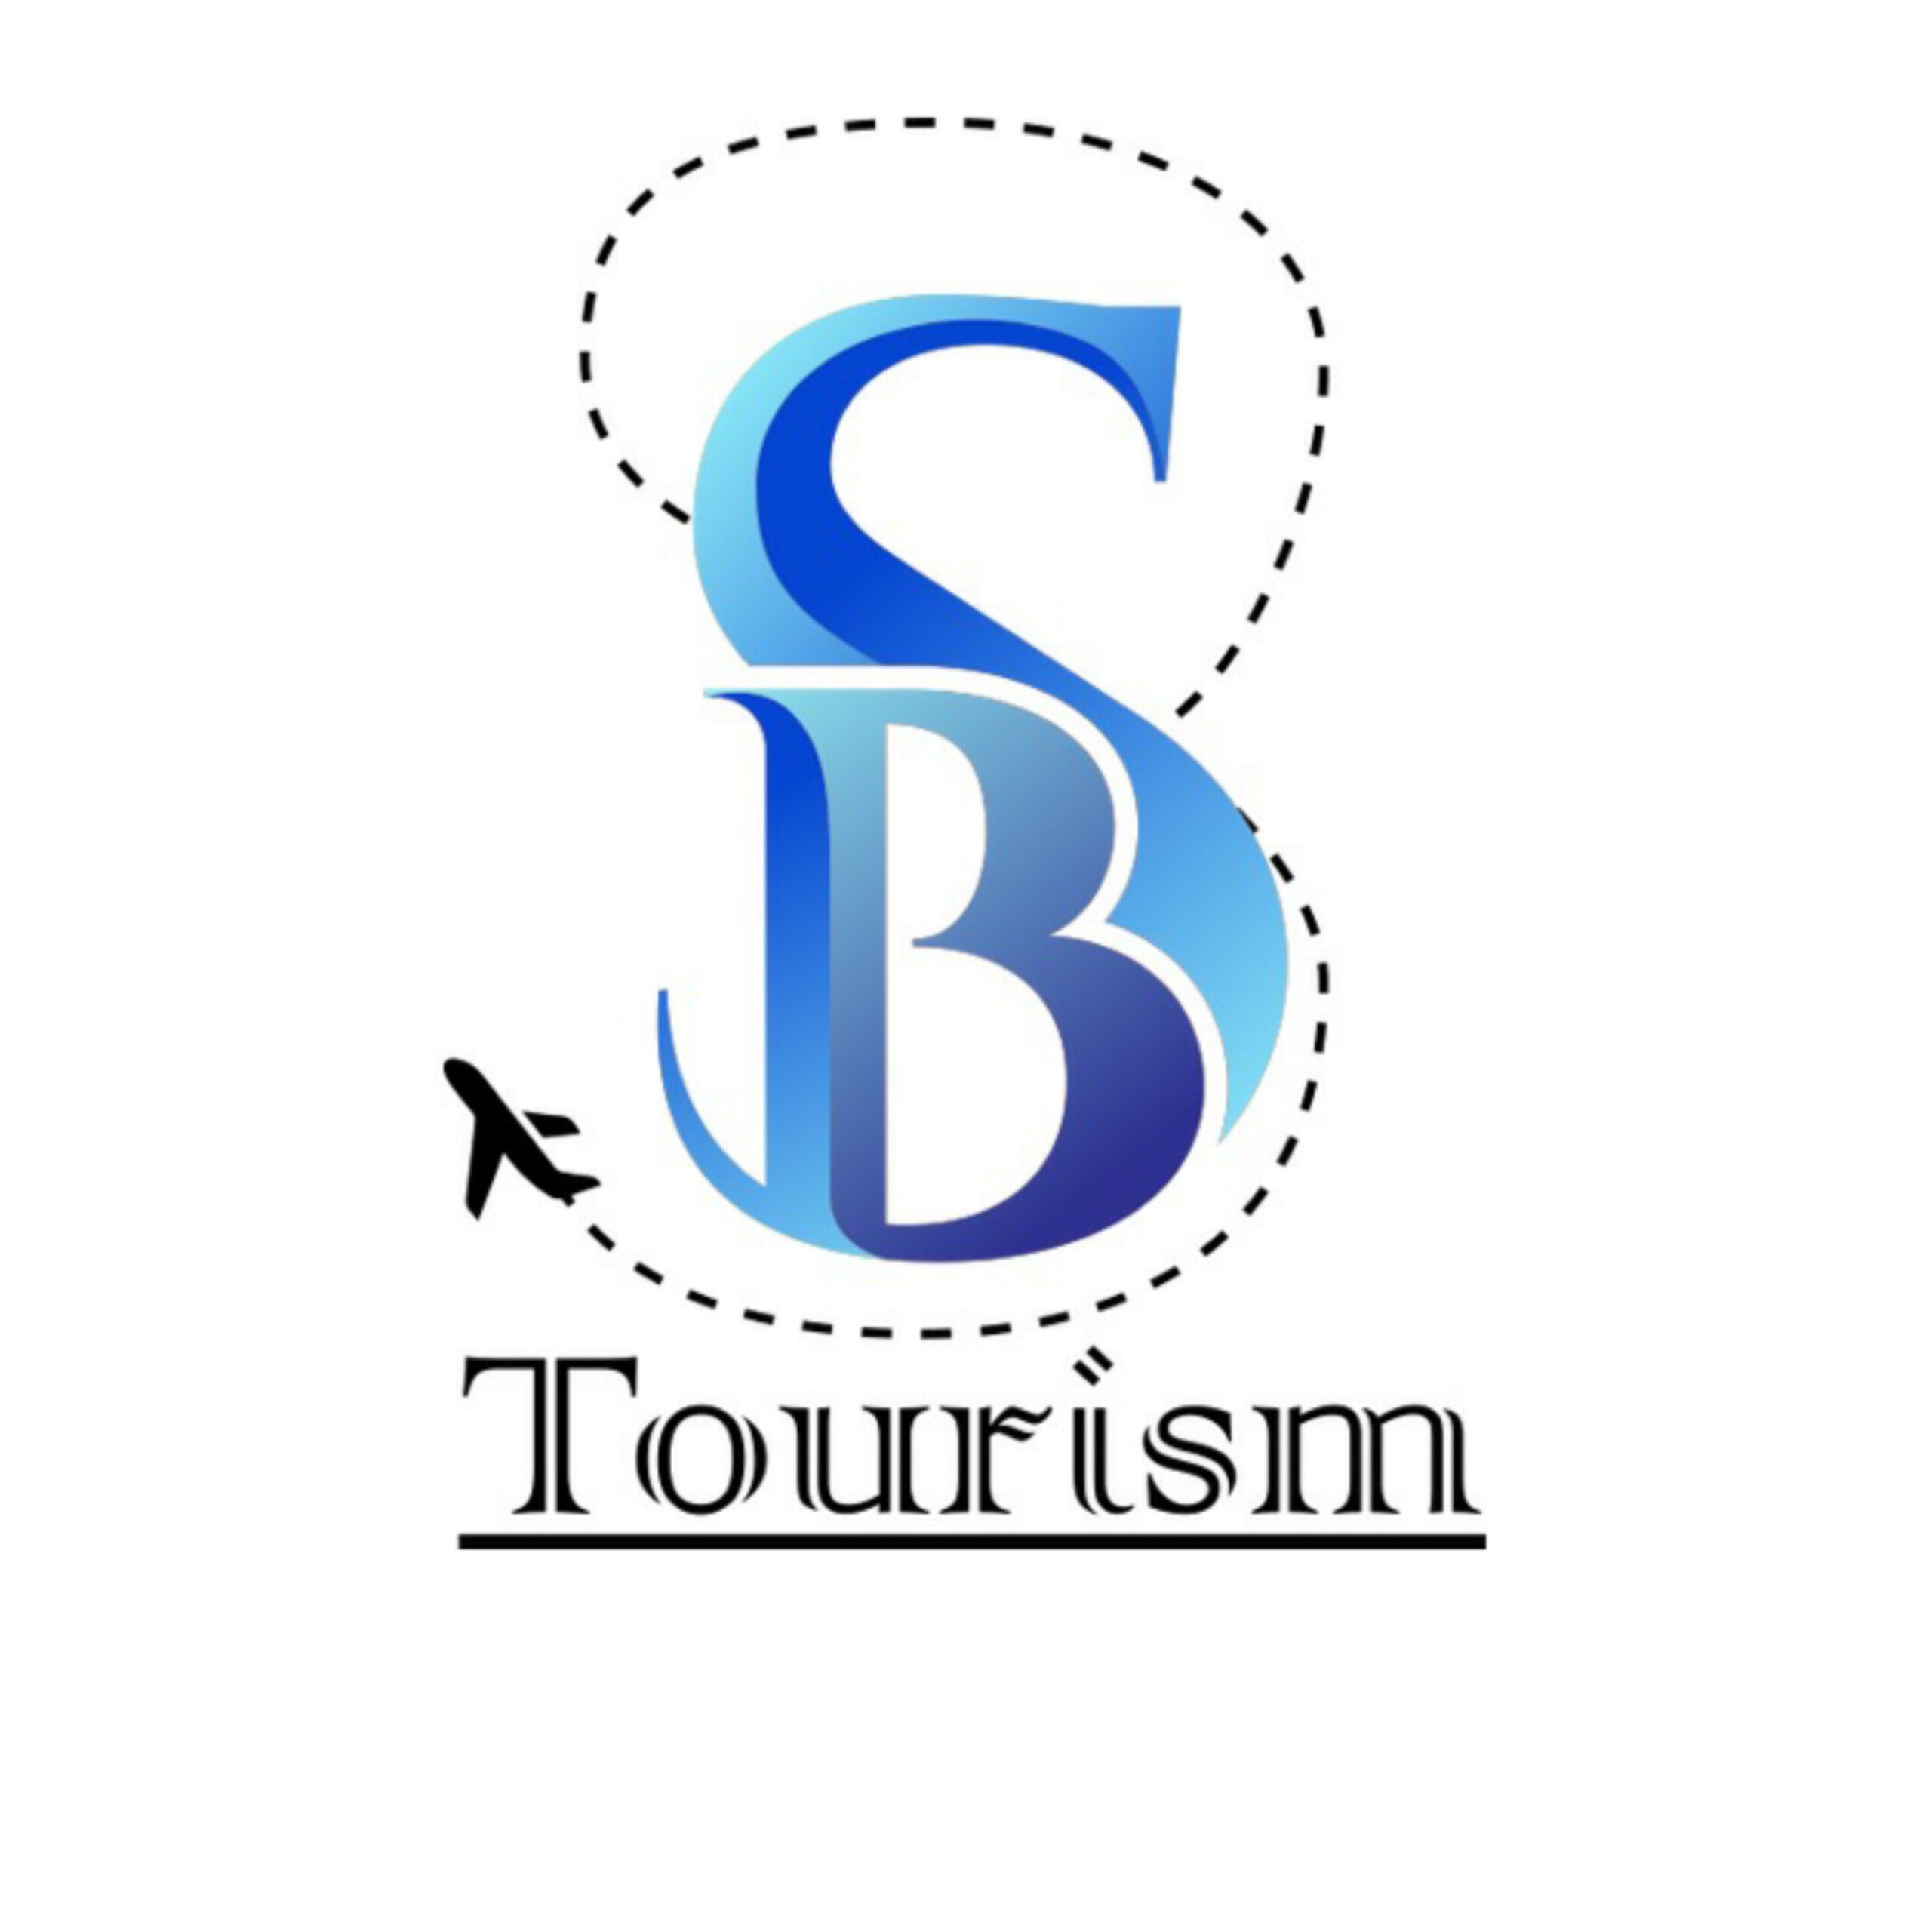 Sbtourism